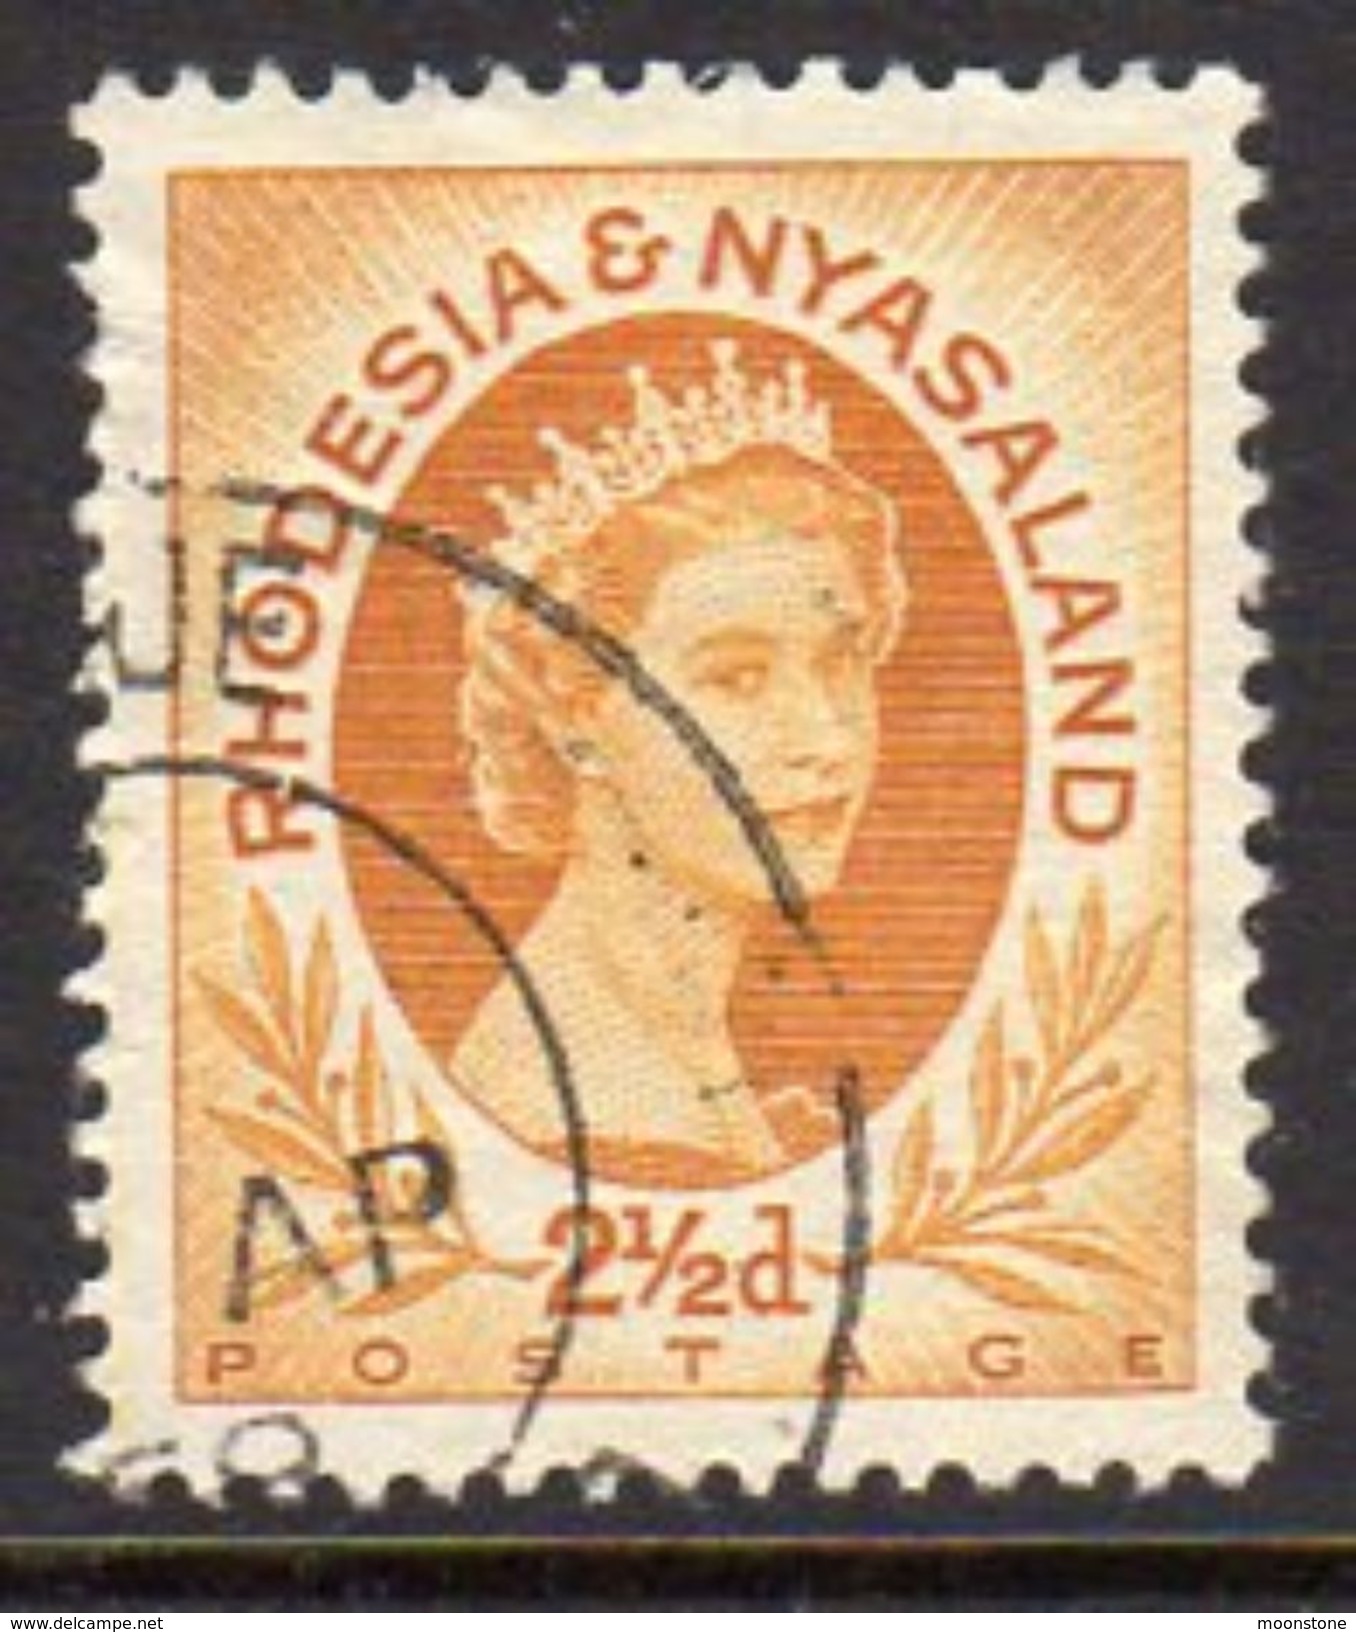 Rhodesia & Nyasaland 1954 2½d Definitive, Used, SG 3a (BA) - Rhodesia & Nyasaland (1954-1963)